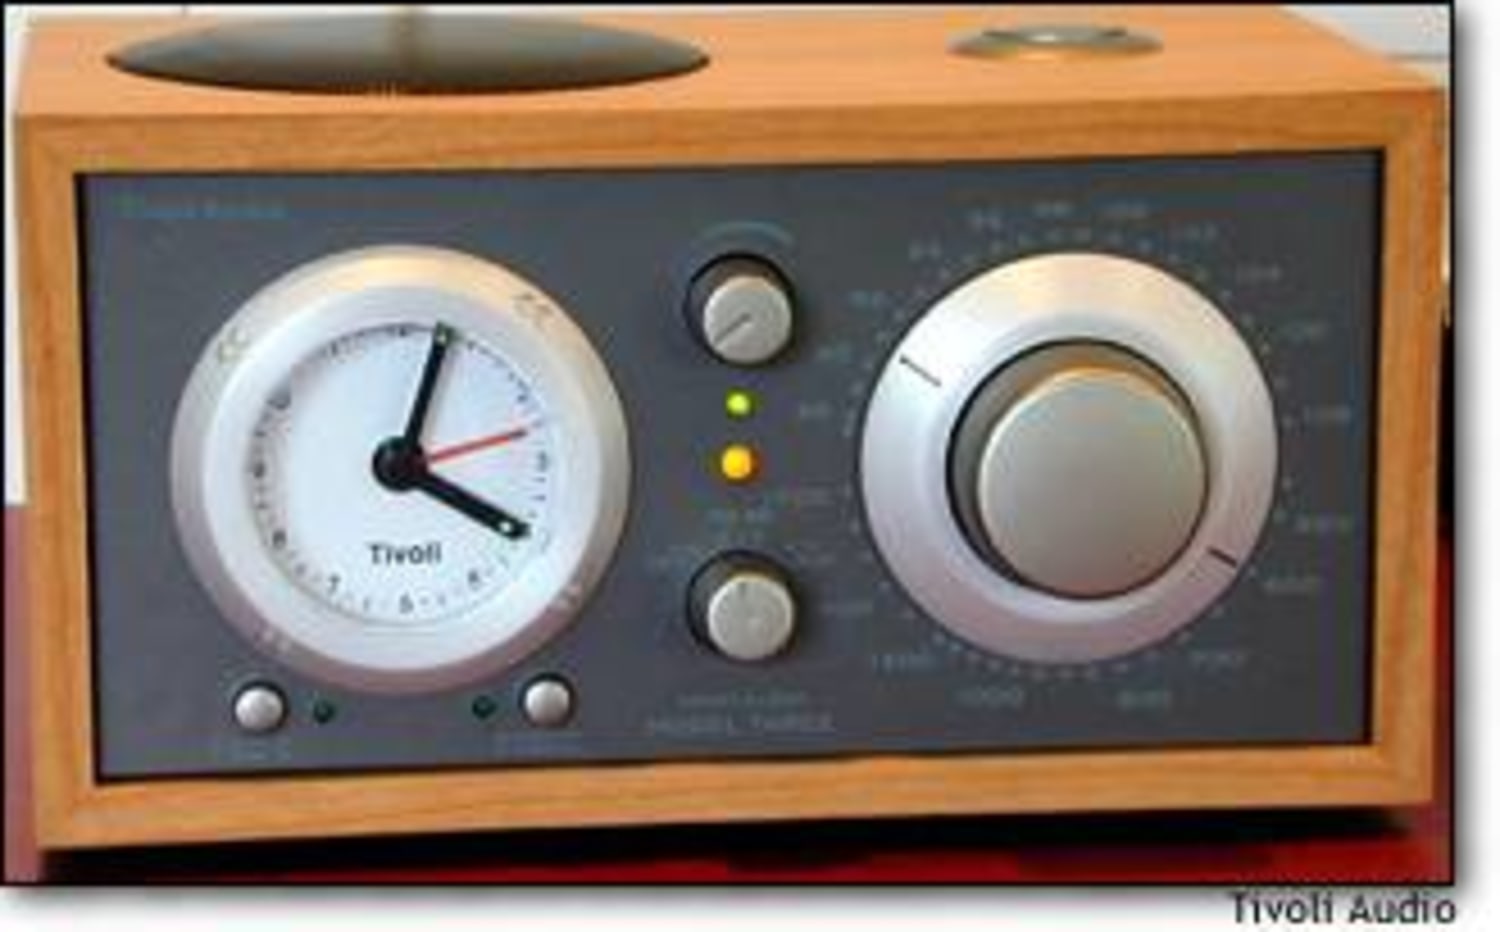 Review: clock radio